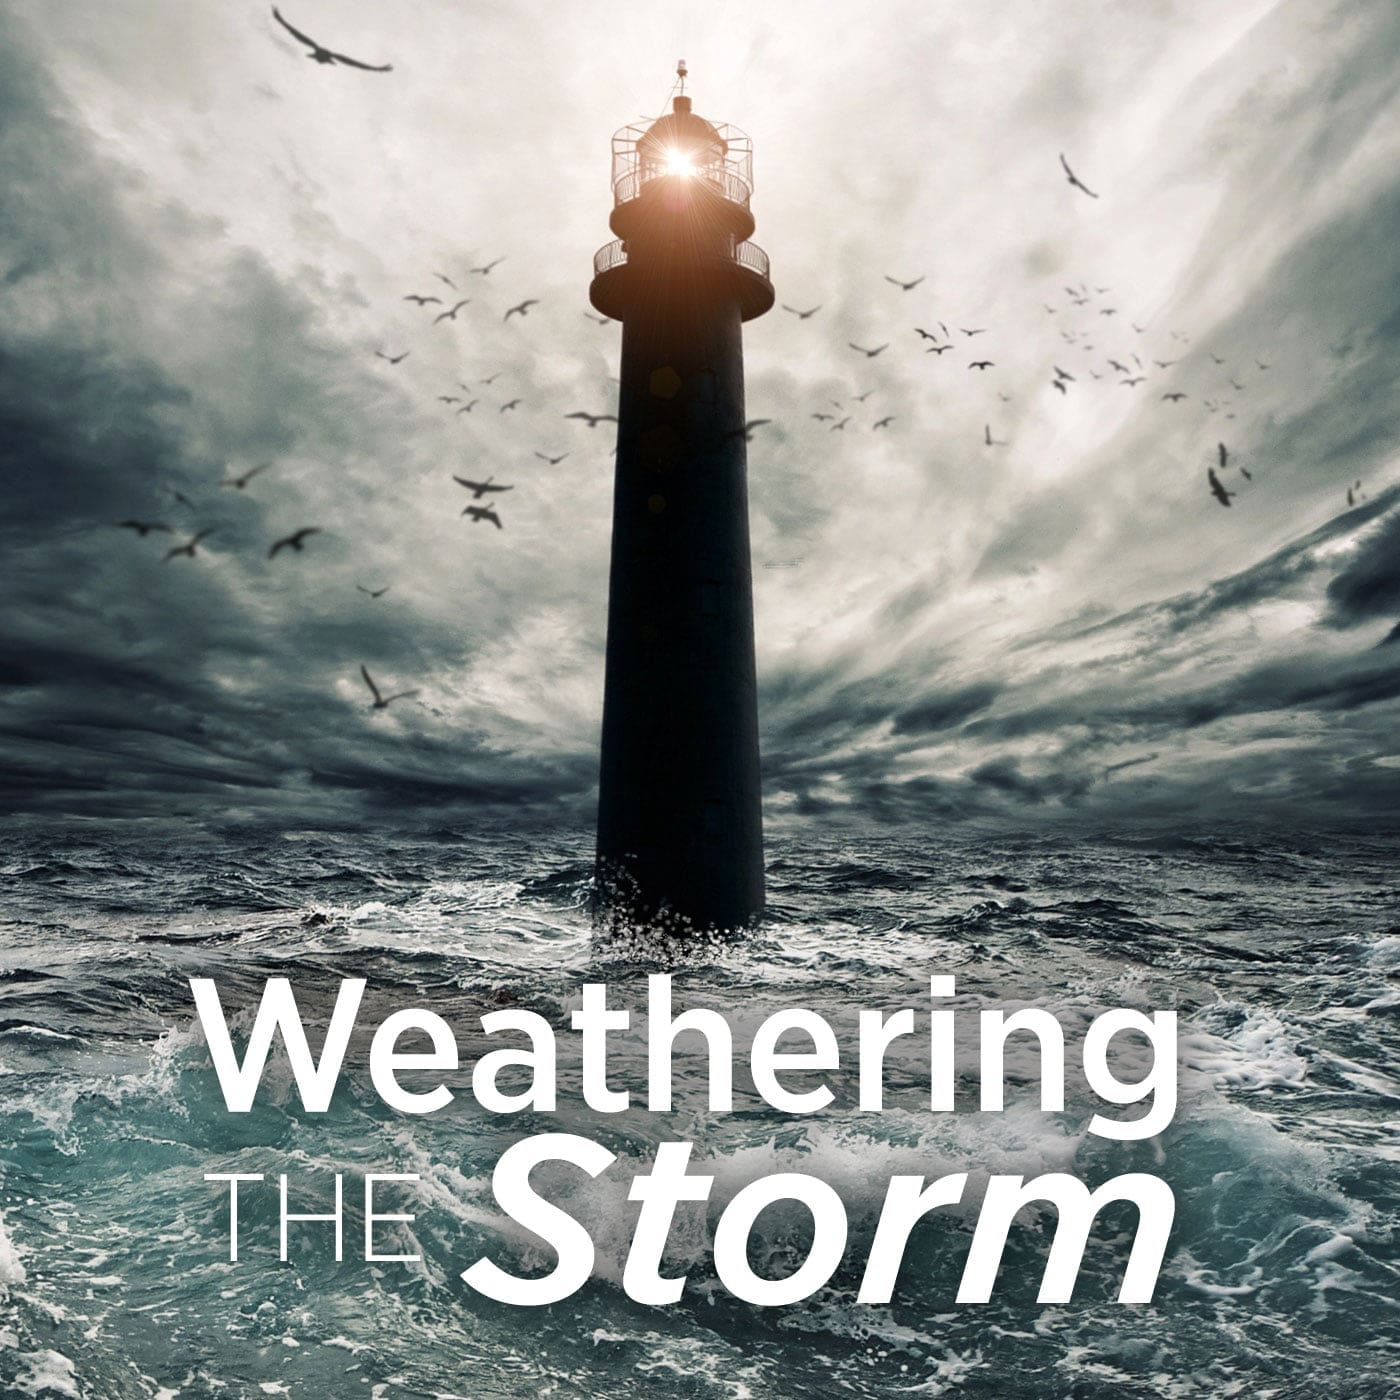 Predicting the Storm Image